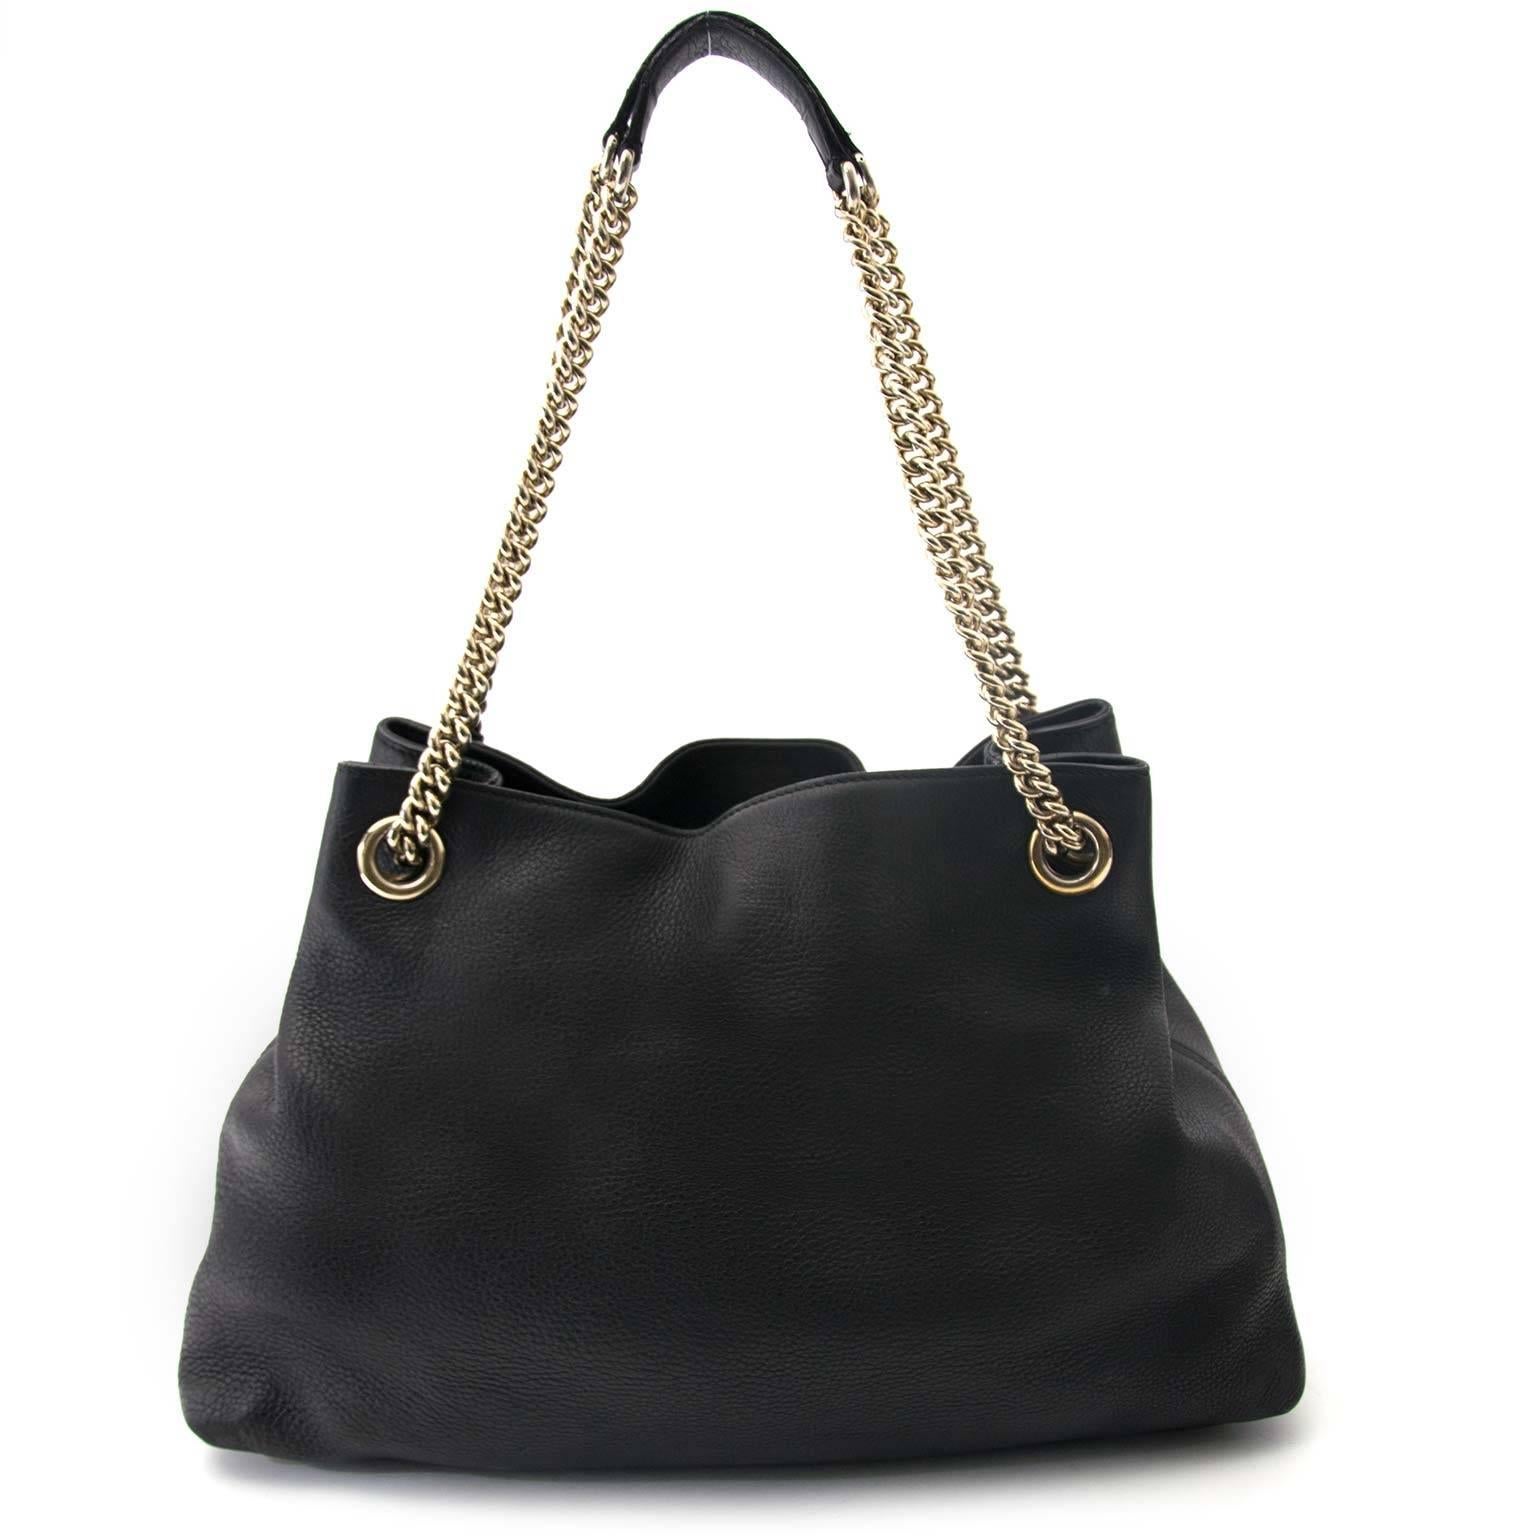 black gucci bag with chain strap